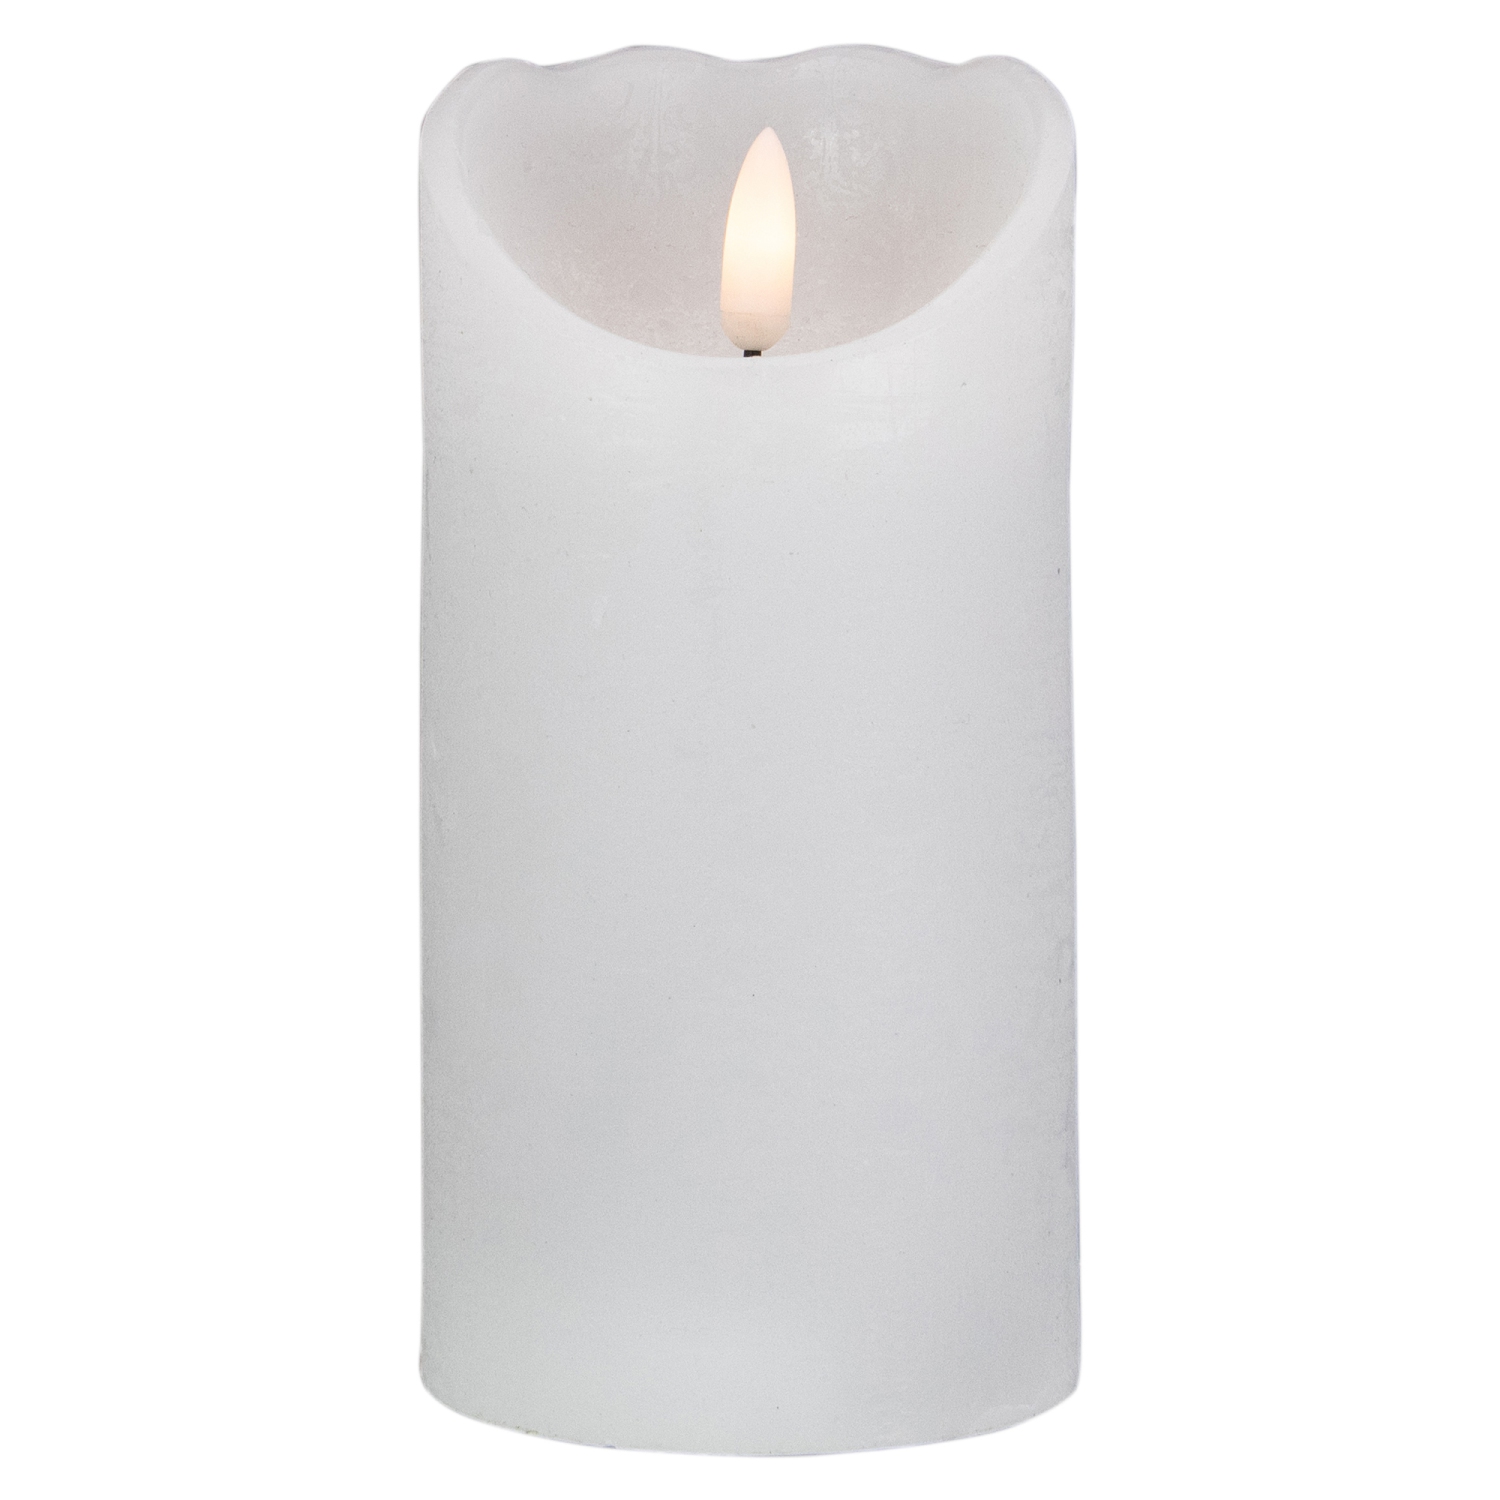 6" LED White Flameless Pillar Christmas Décor Candle